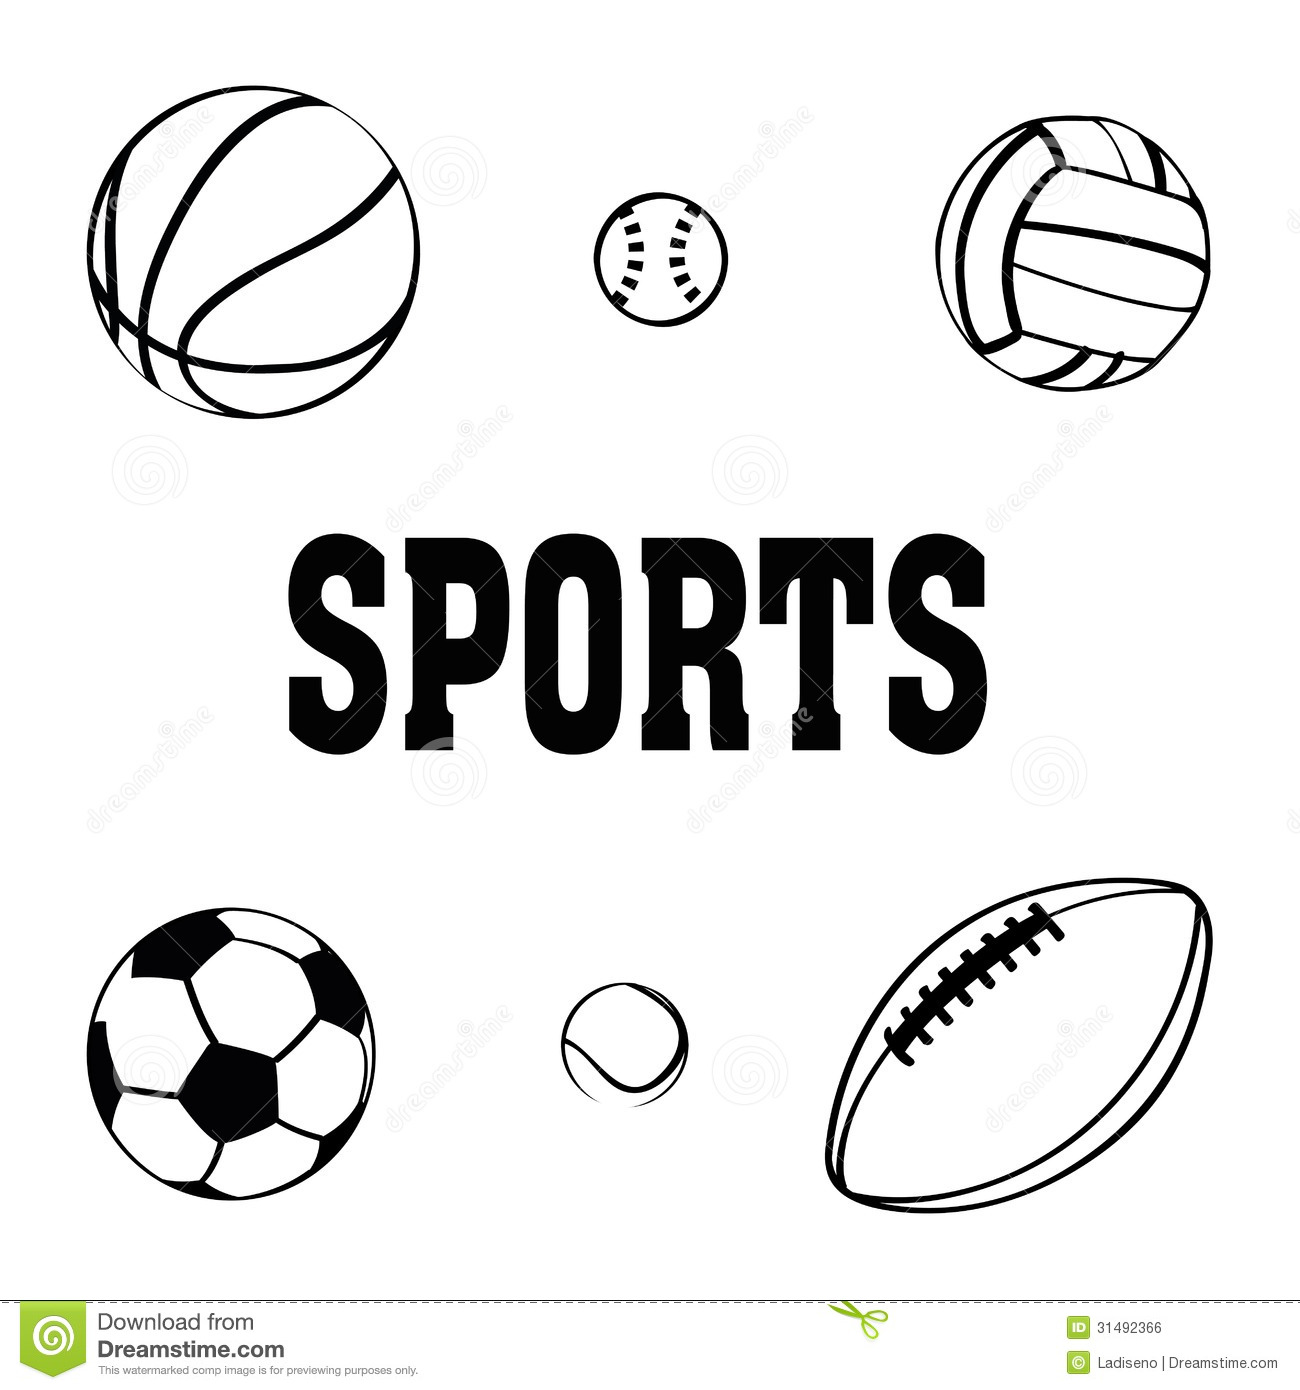 Sports Balls Royalty Free Stock Image   Image  31492366